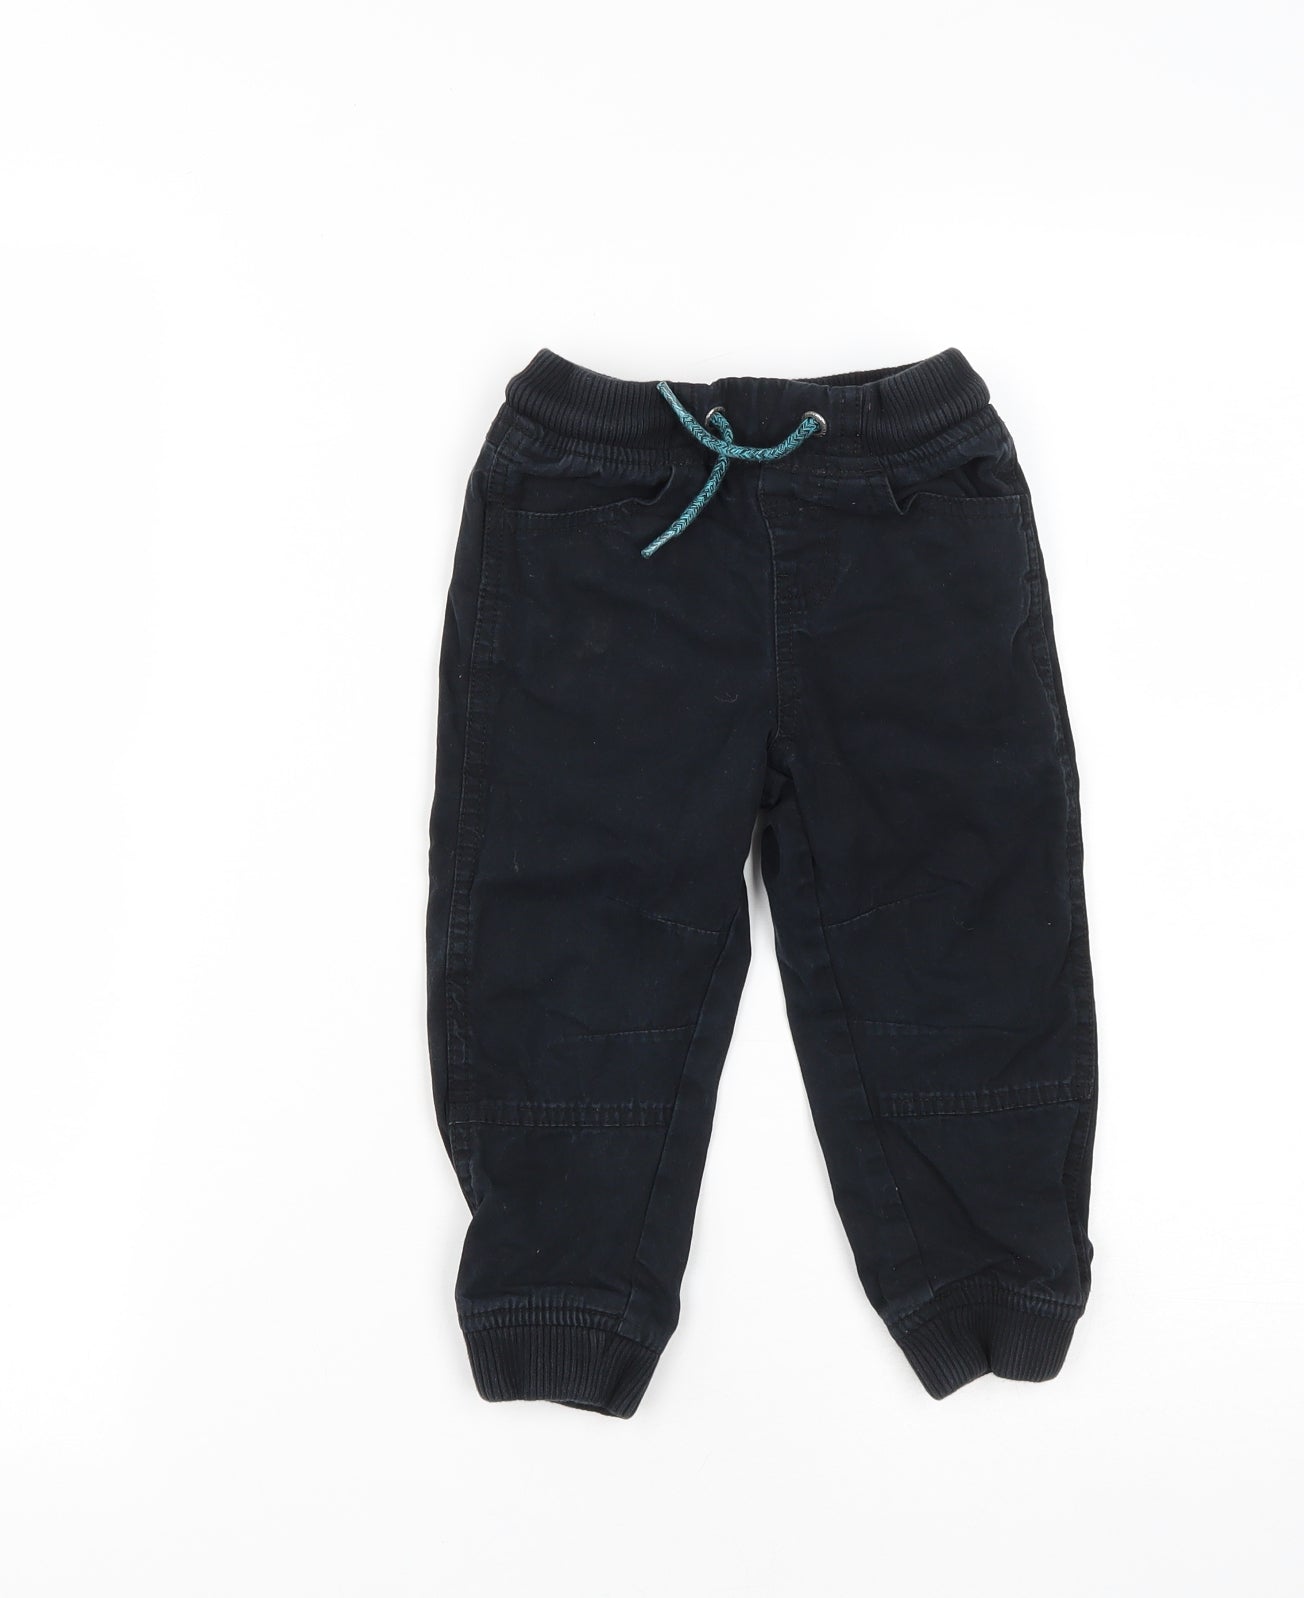 Jogger Cotton Preworn Drawst Boys Ltd Size 2-3 Years Lupilu Trousers – Black Regular